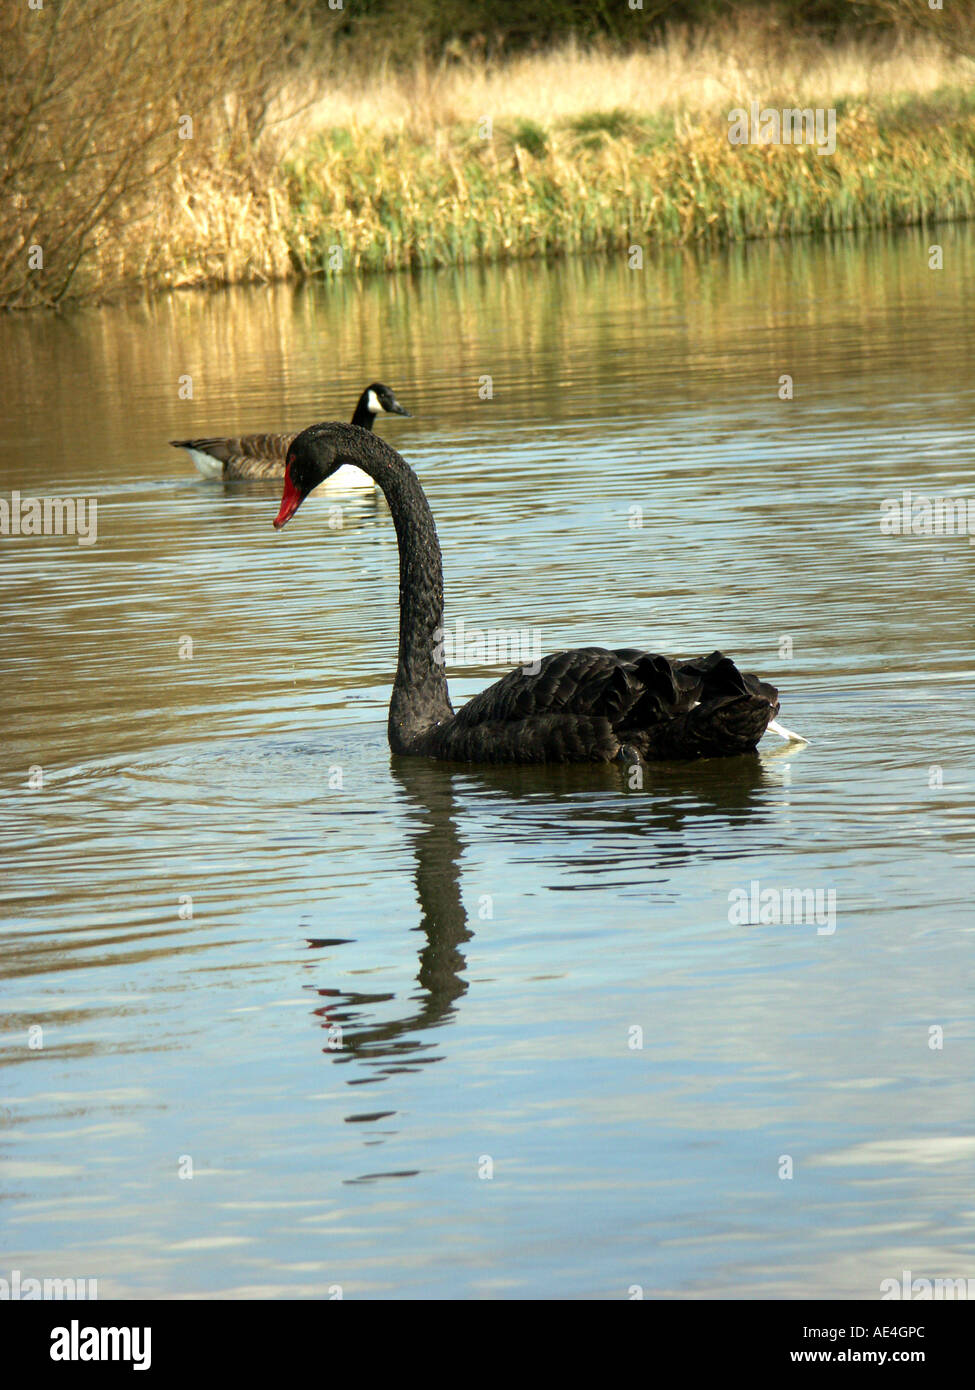 Black Swan on lake in England Stock Photo